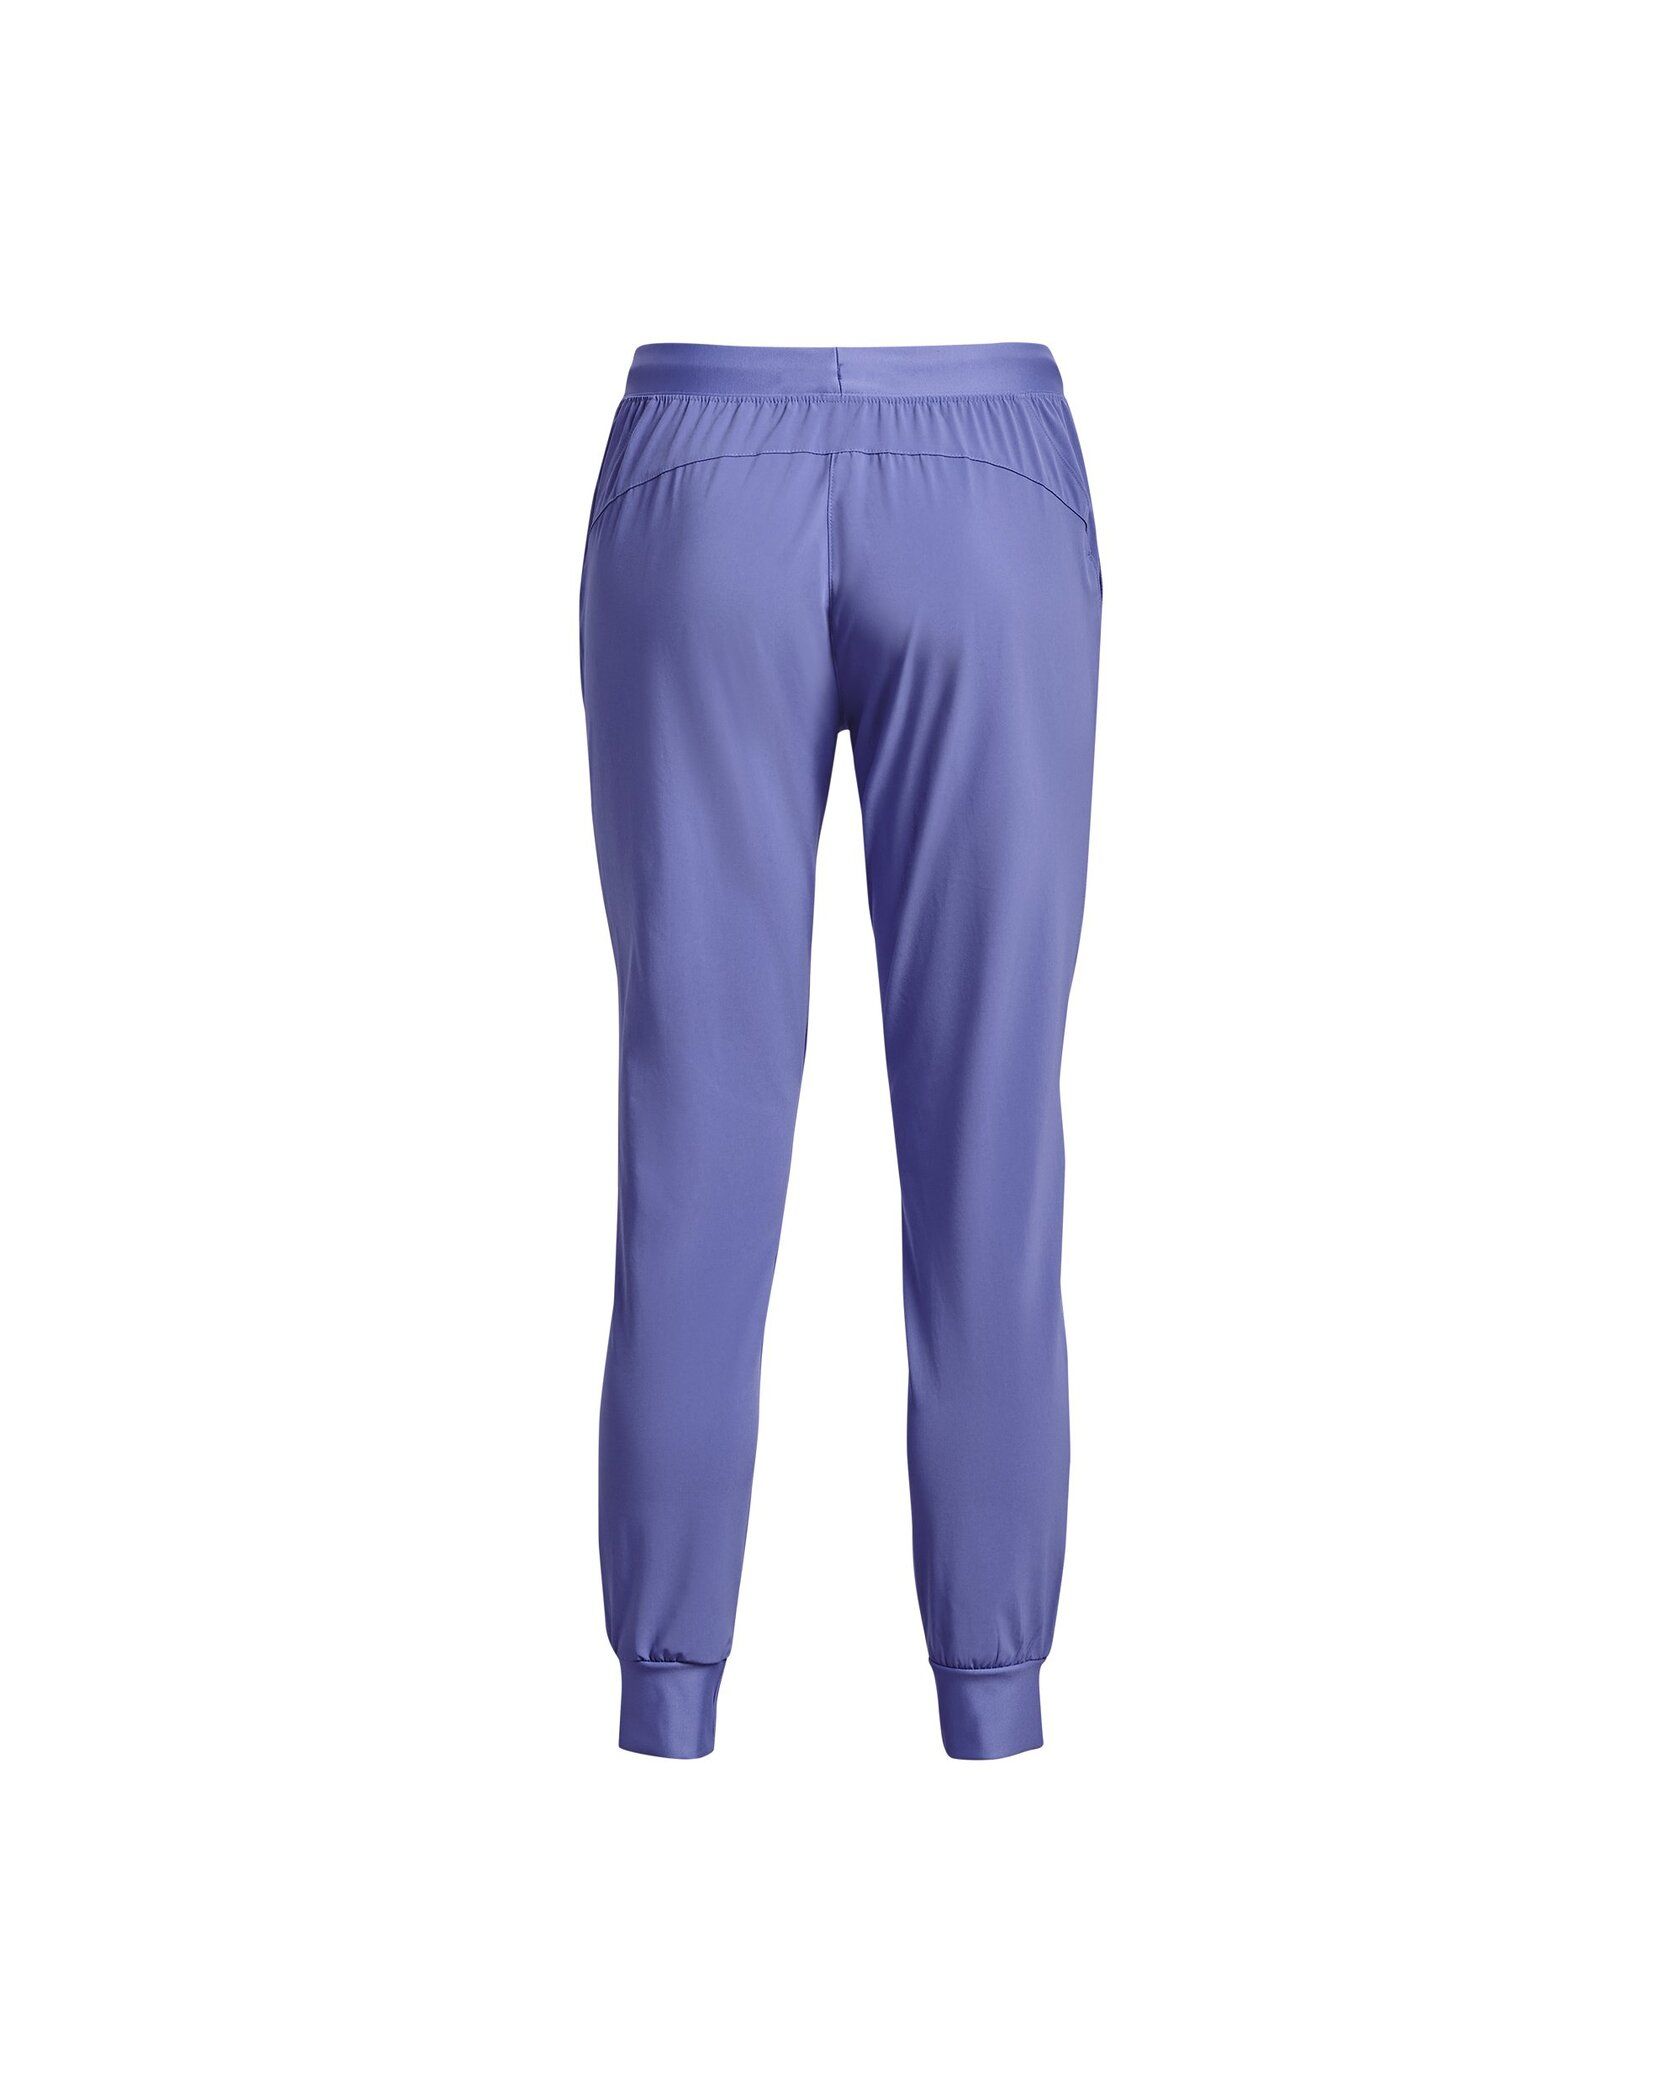 Women's trousers Under Armour Women's UA Armour Sport Woven Pants -  midnight navy/metallic silver, Tennis Zone